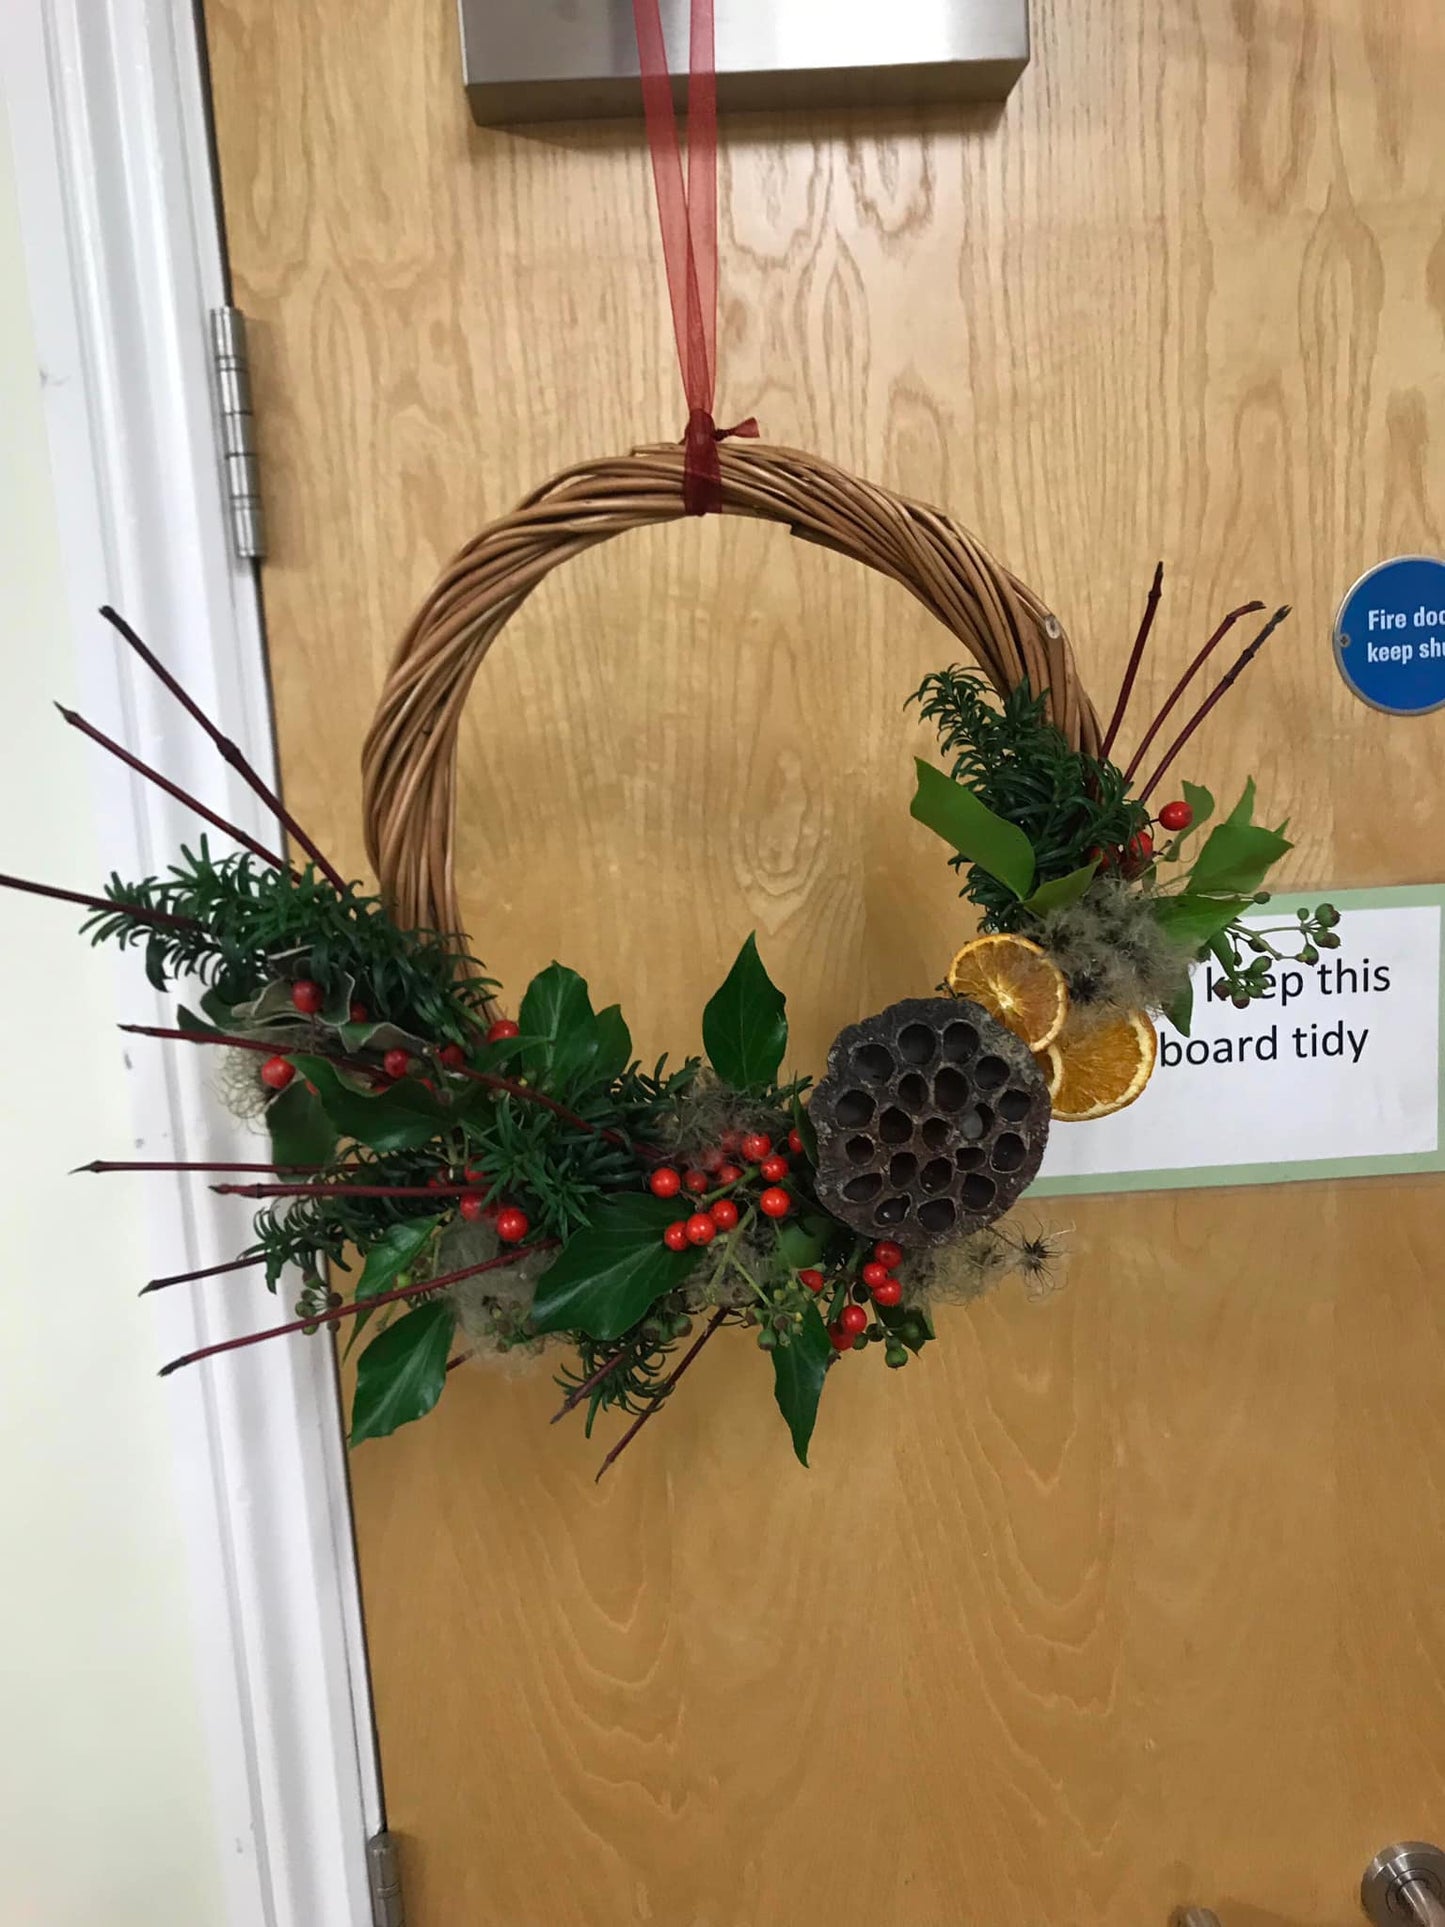 Willow Weaving Christmas Wreath Workshop - Sunday 3rd December 9.30am